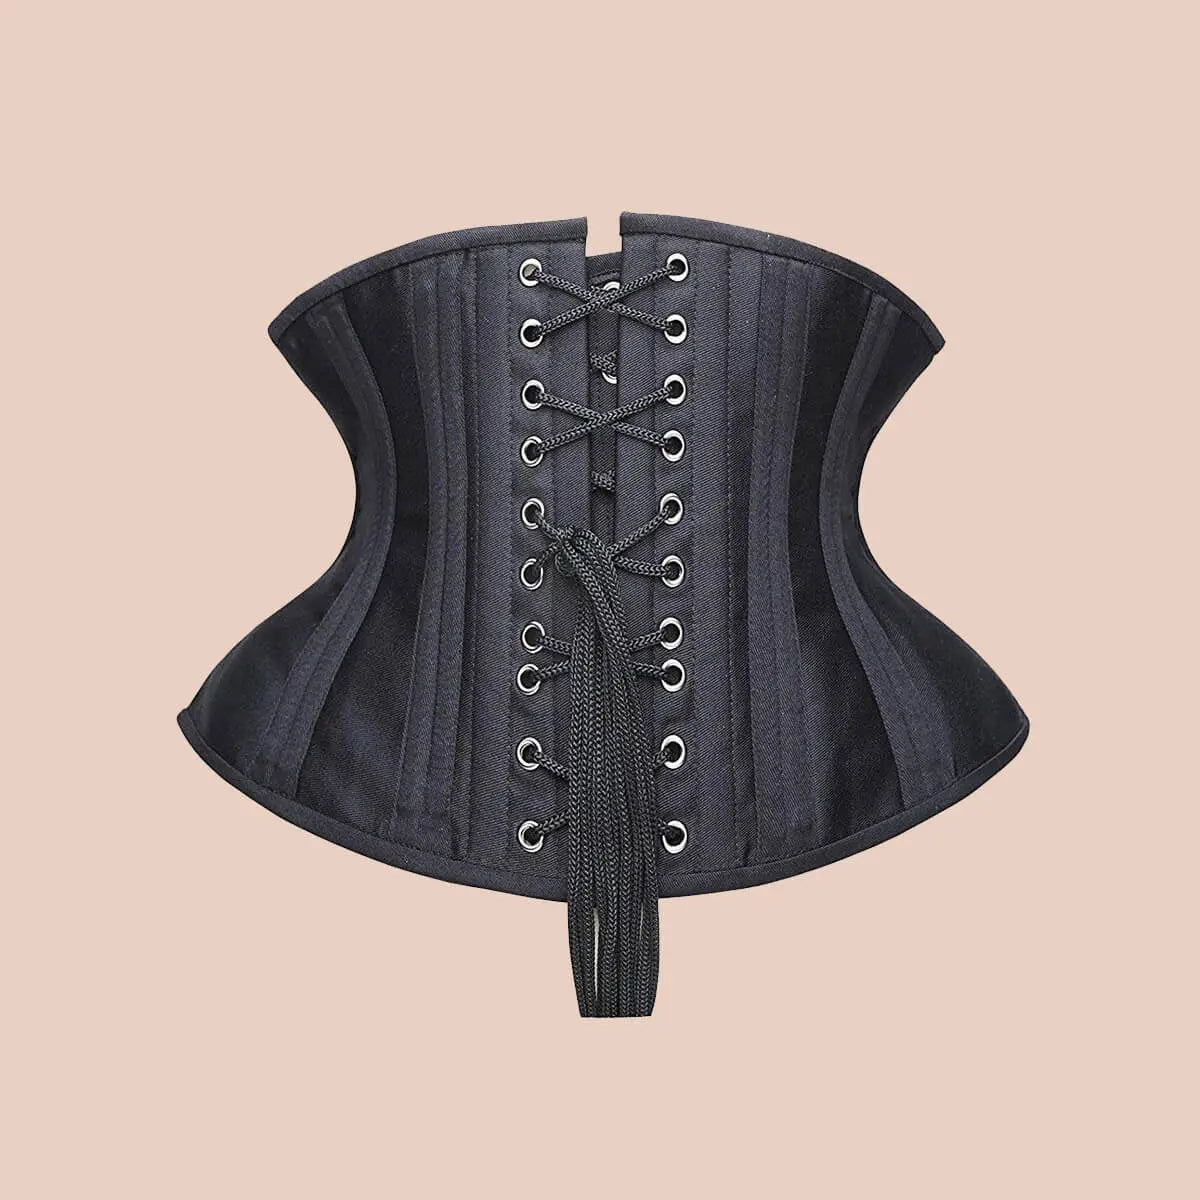 SHAPERX Women's Steel Boned Corset Gothic Stripe India